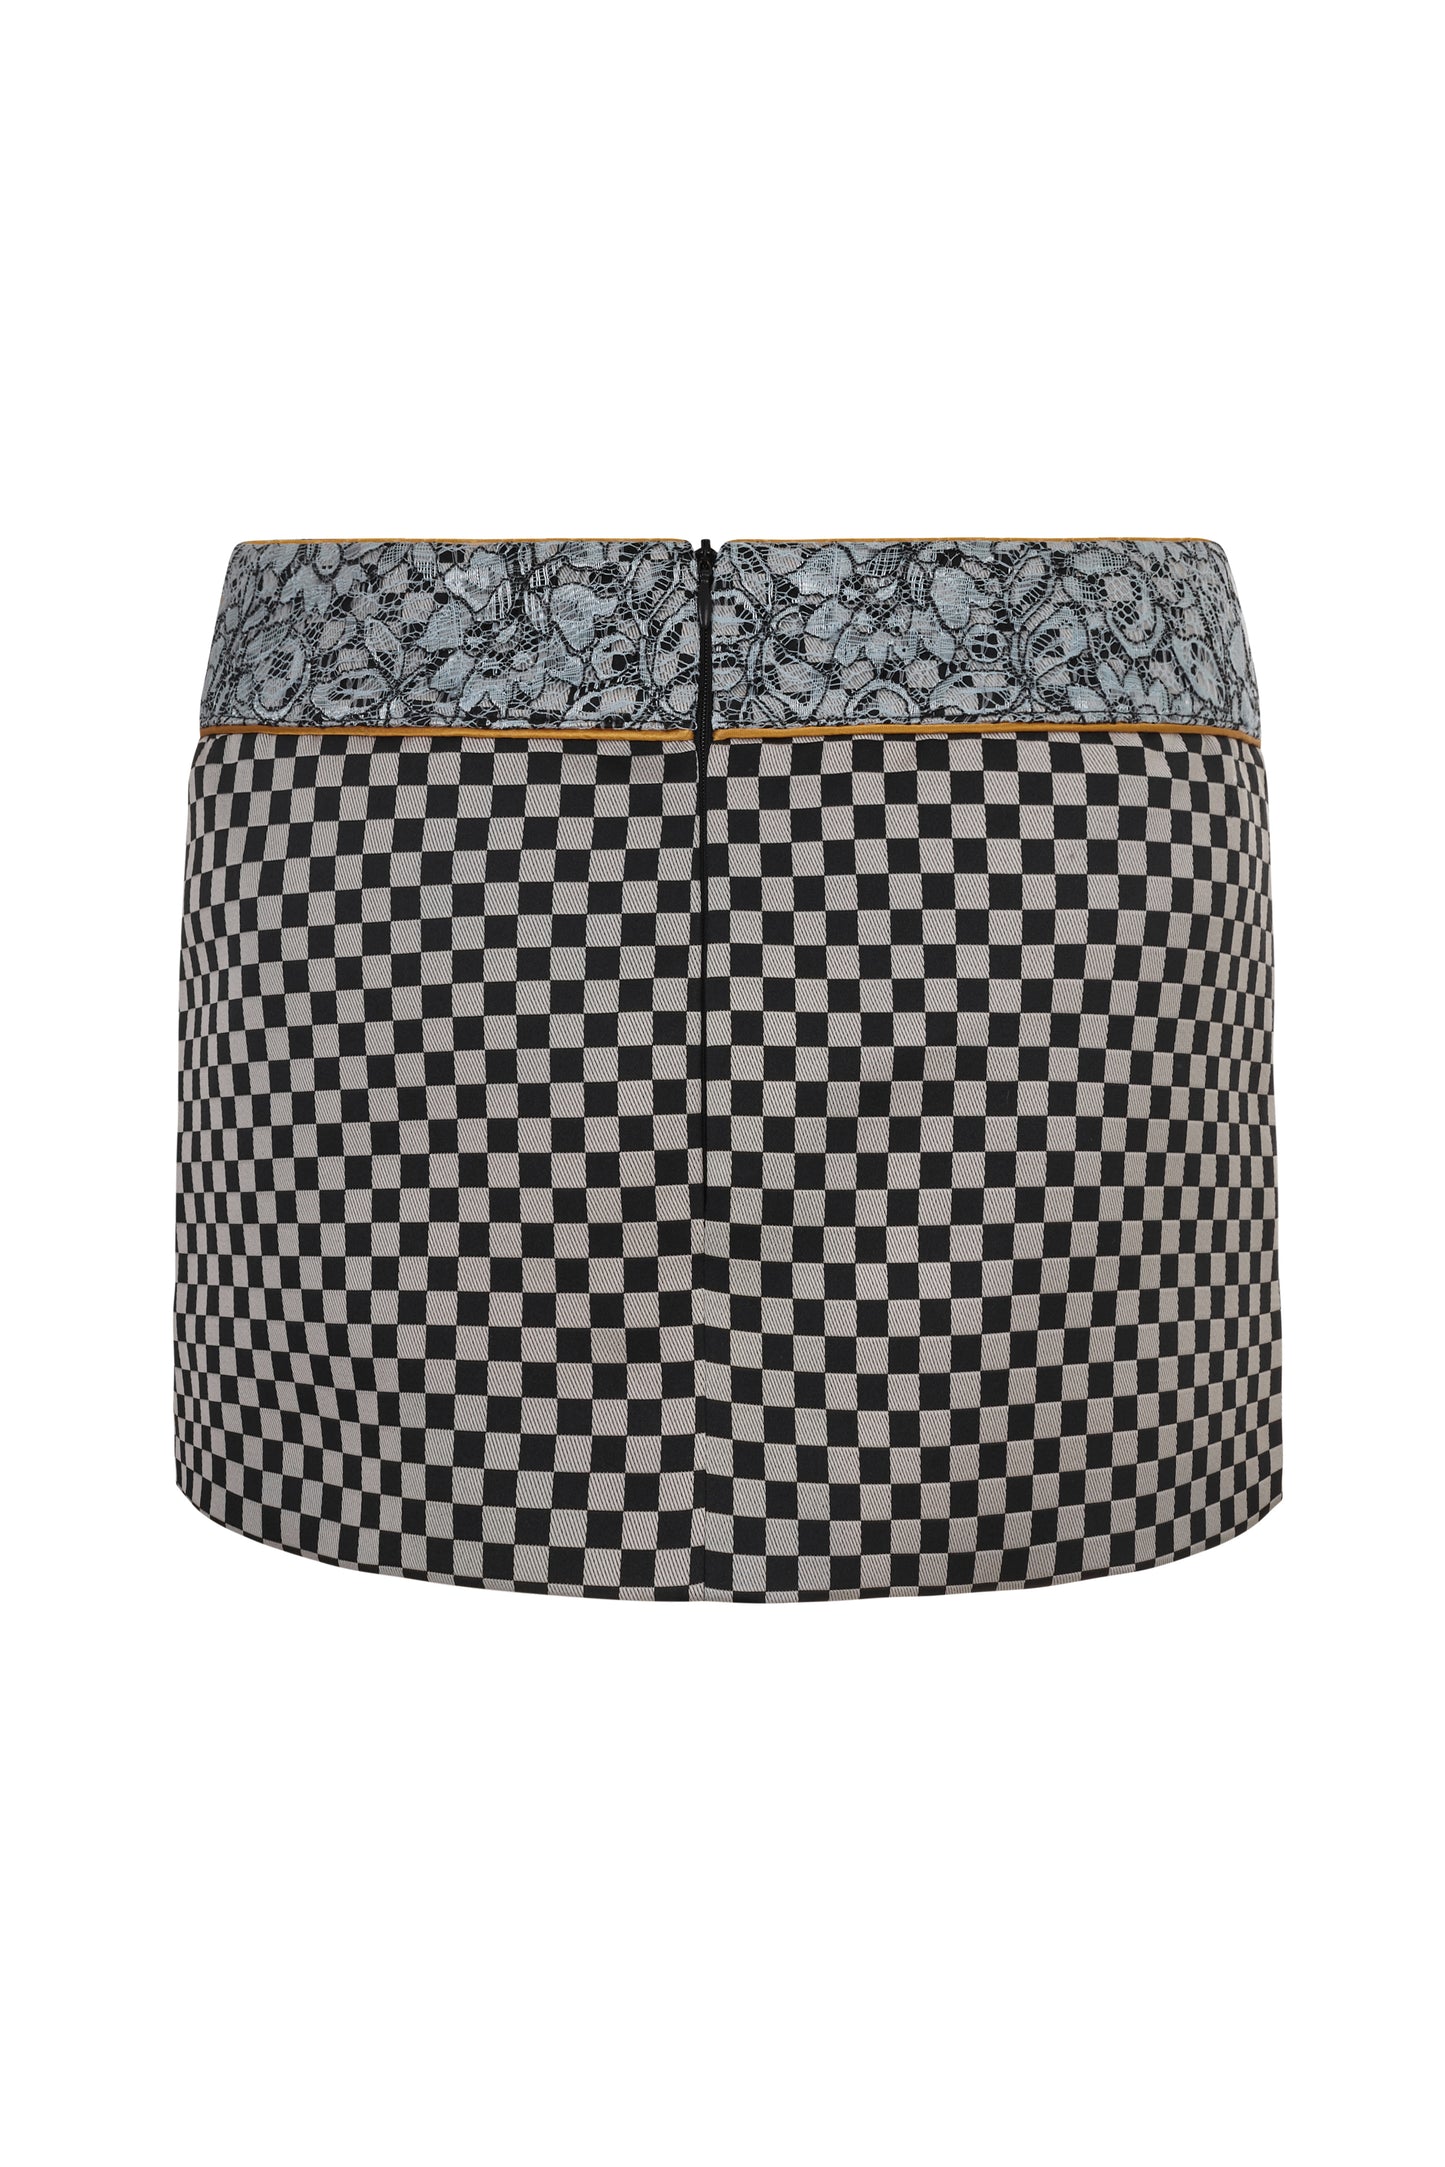 SALE - Chess Mini Skirt